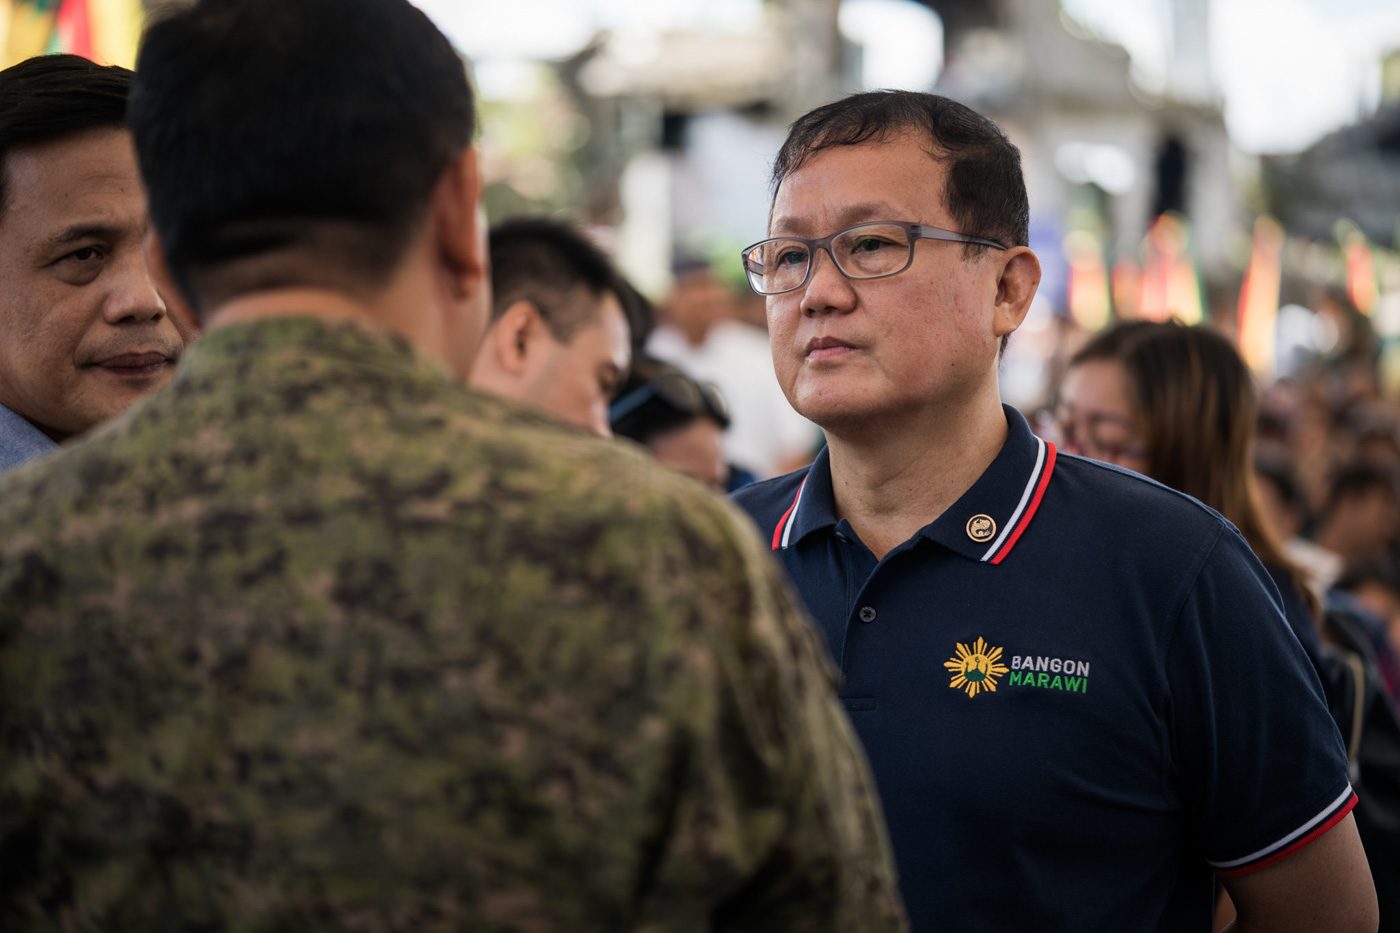 Marawi residents say Del Rosario should resign if rehab target not met